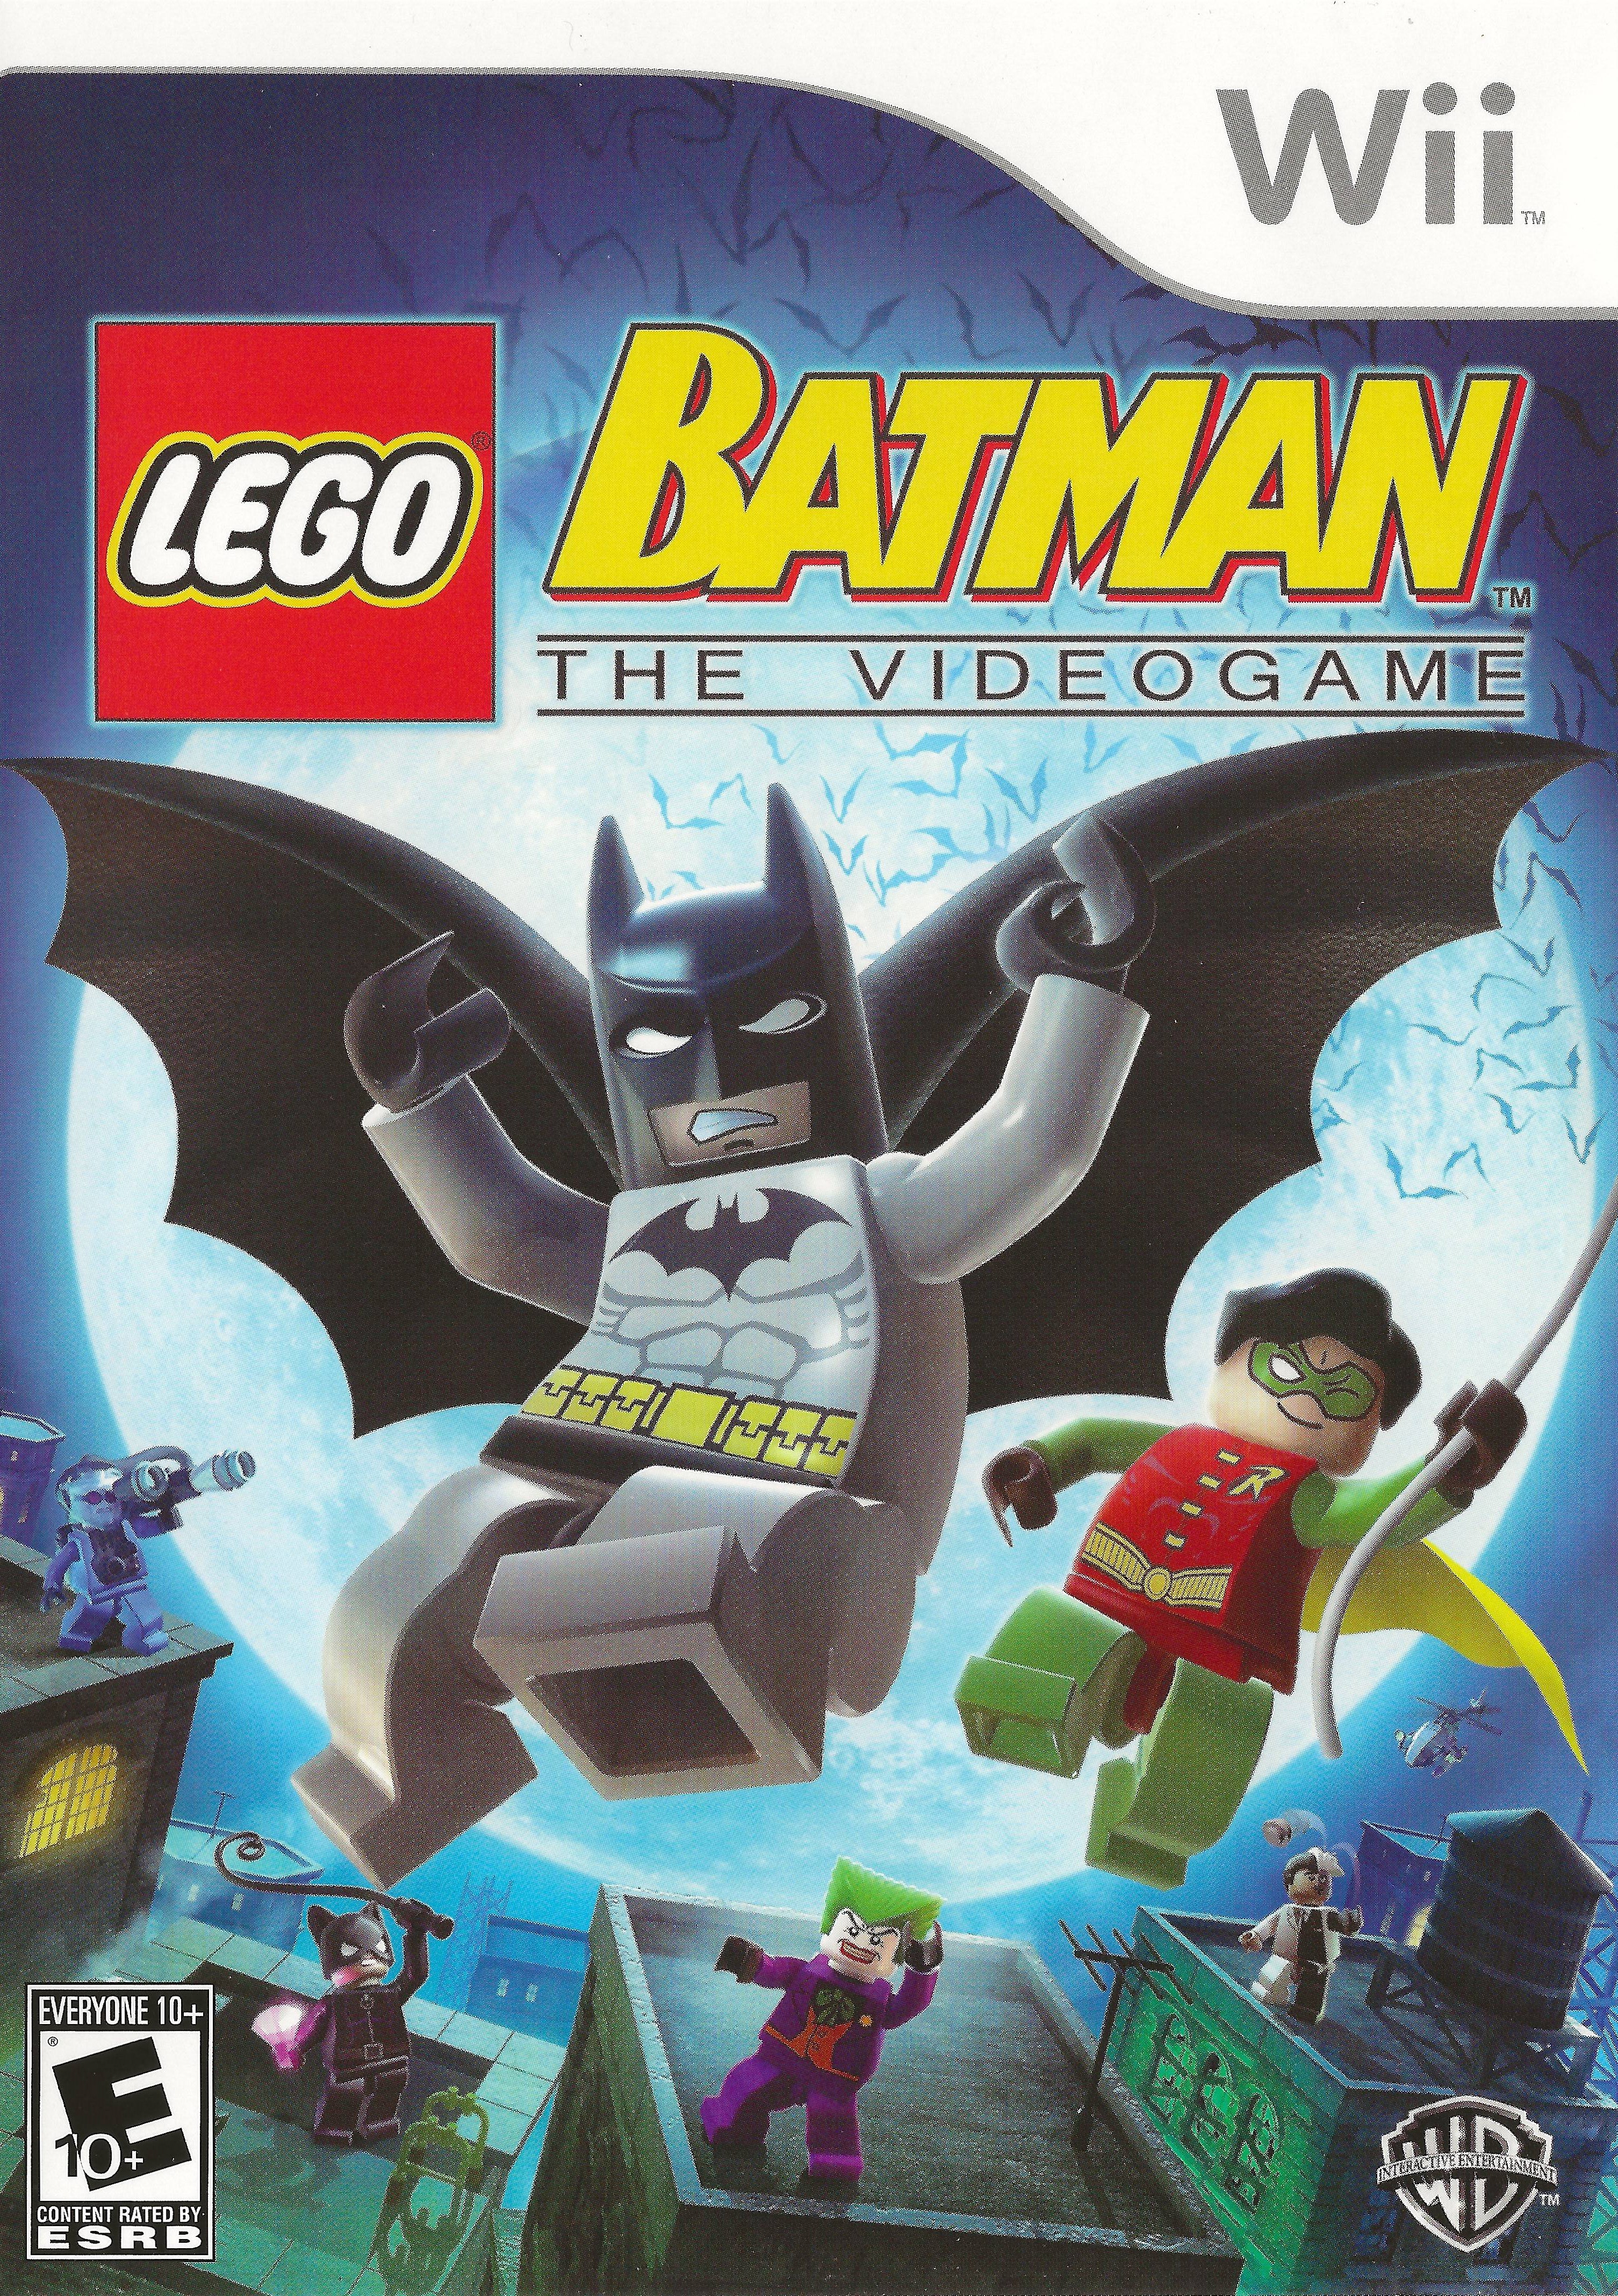 'Lego Batman: The Videogame'